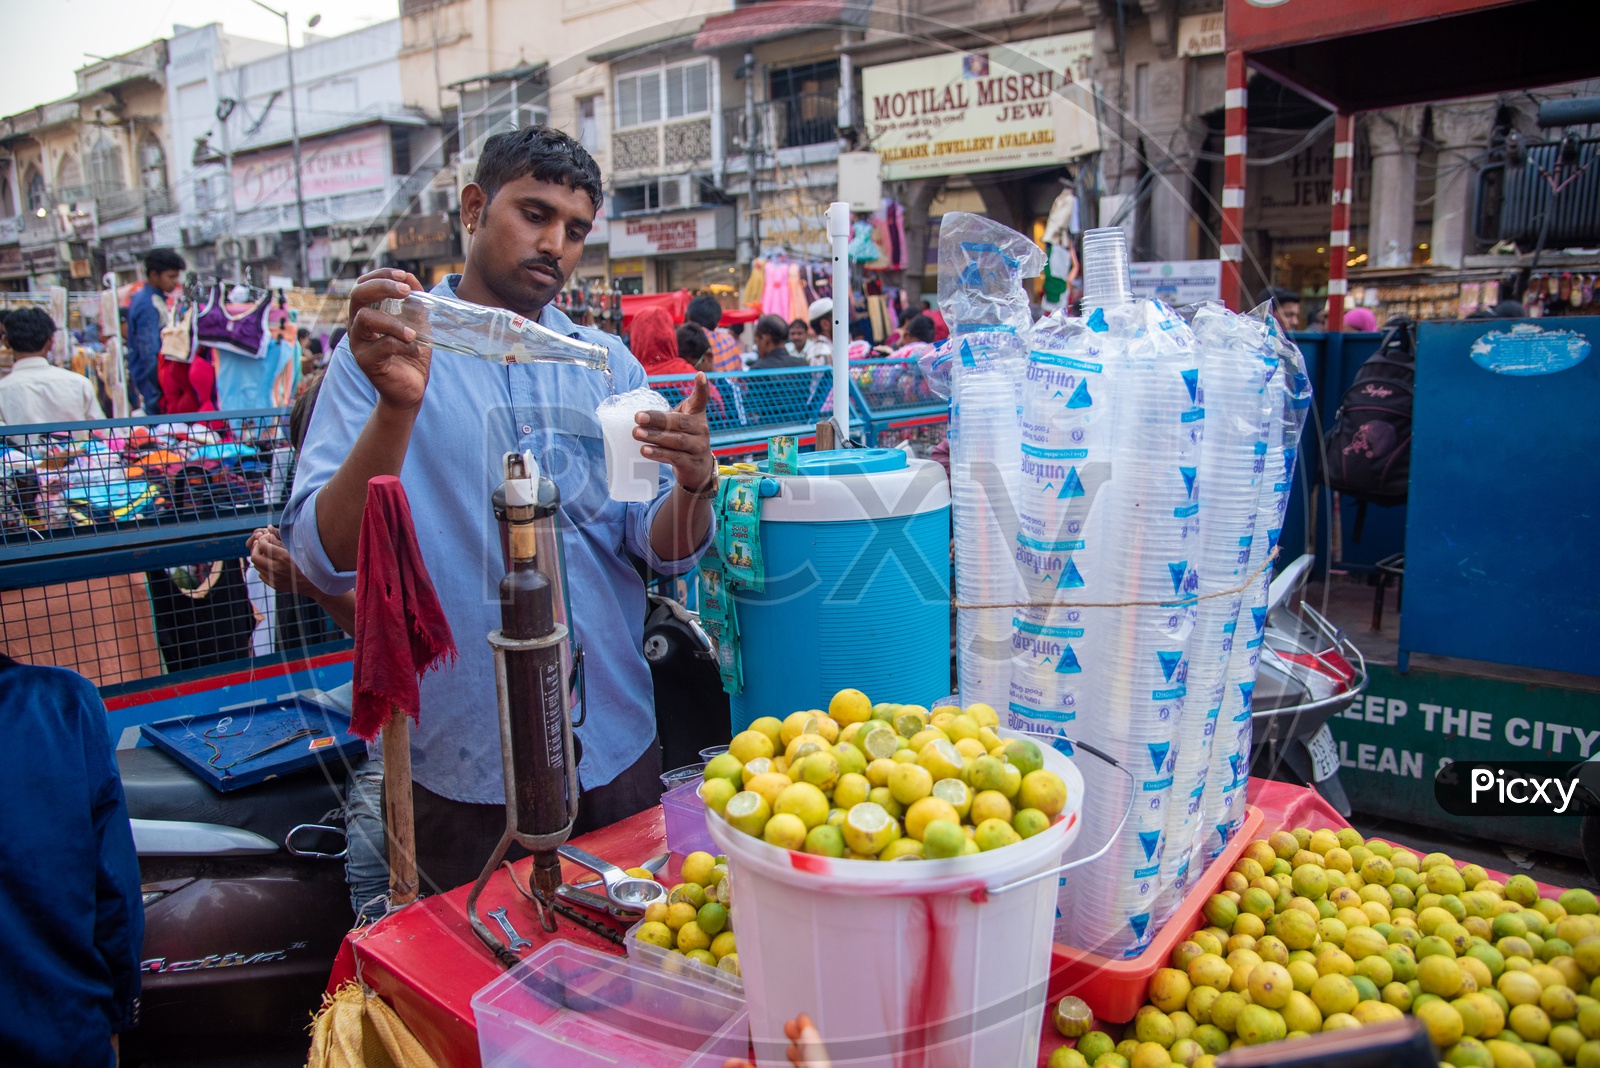 Vendor selling Lemon Soda